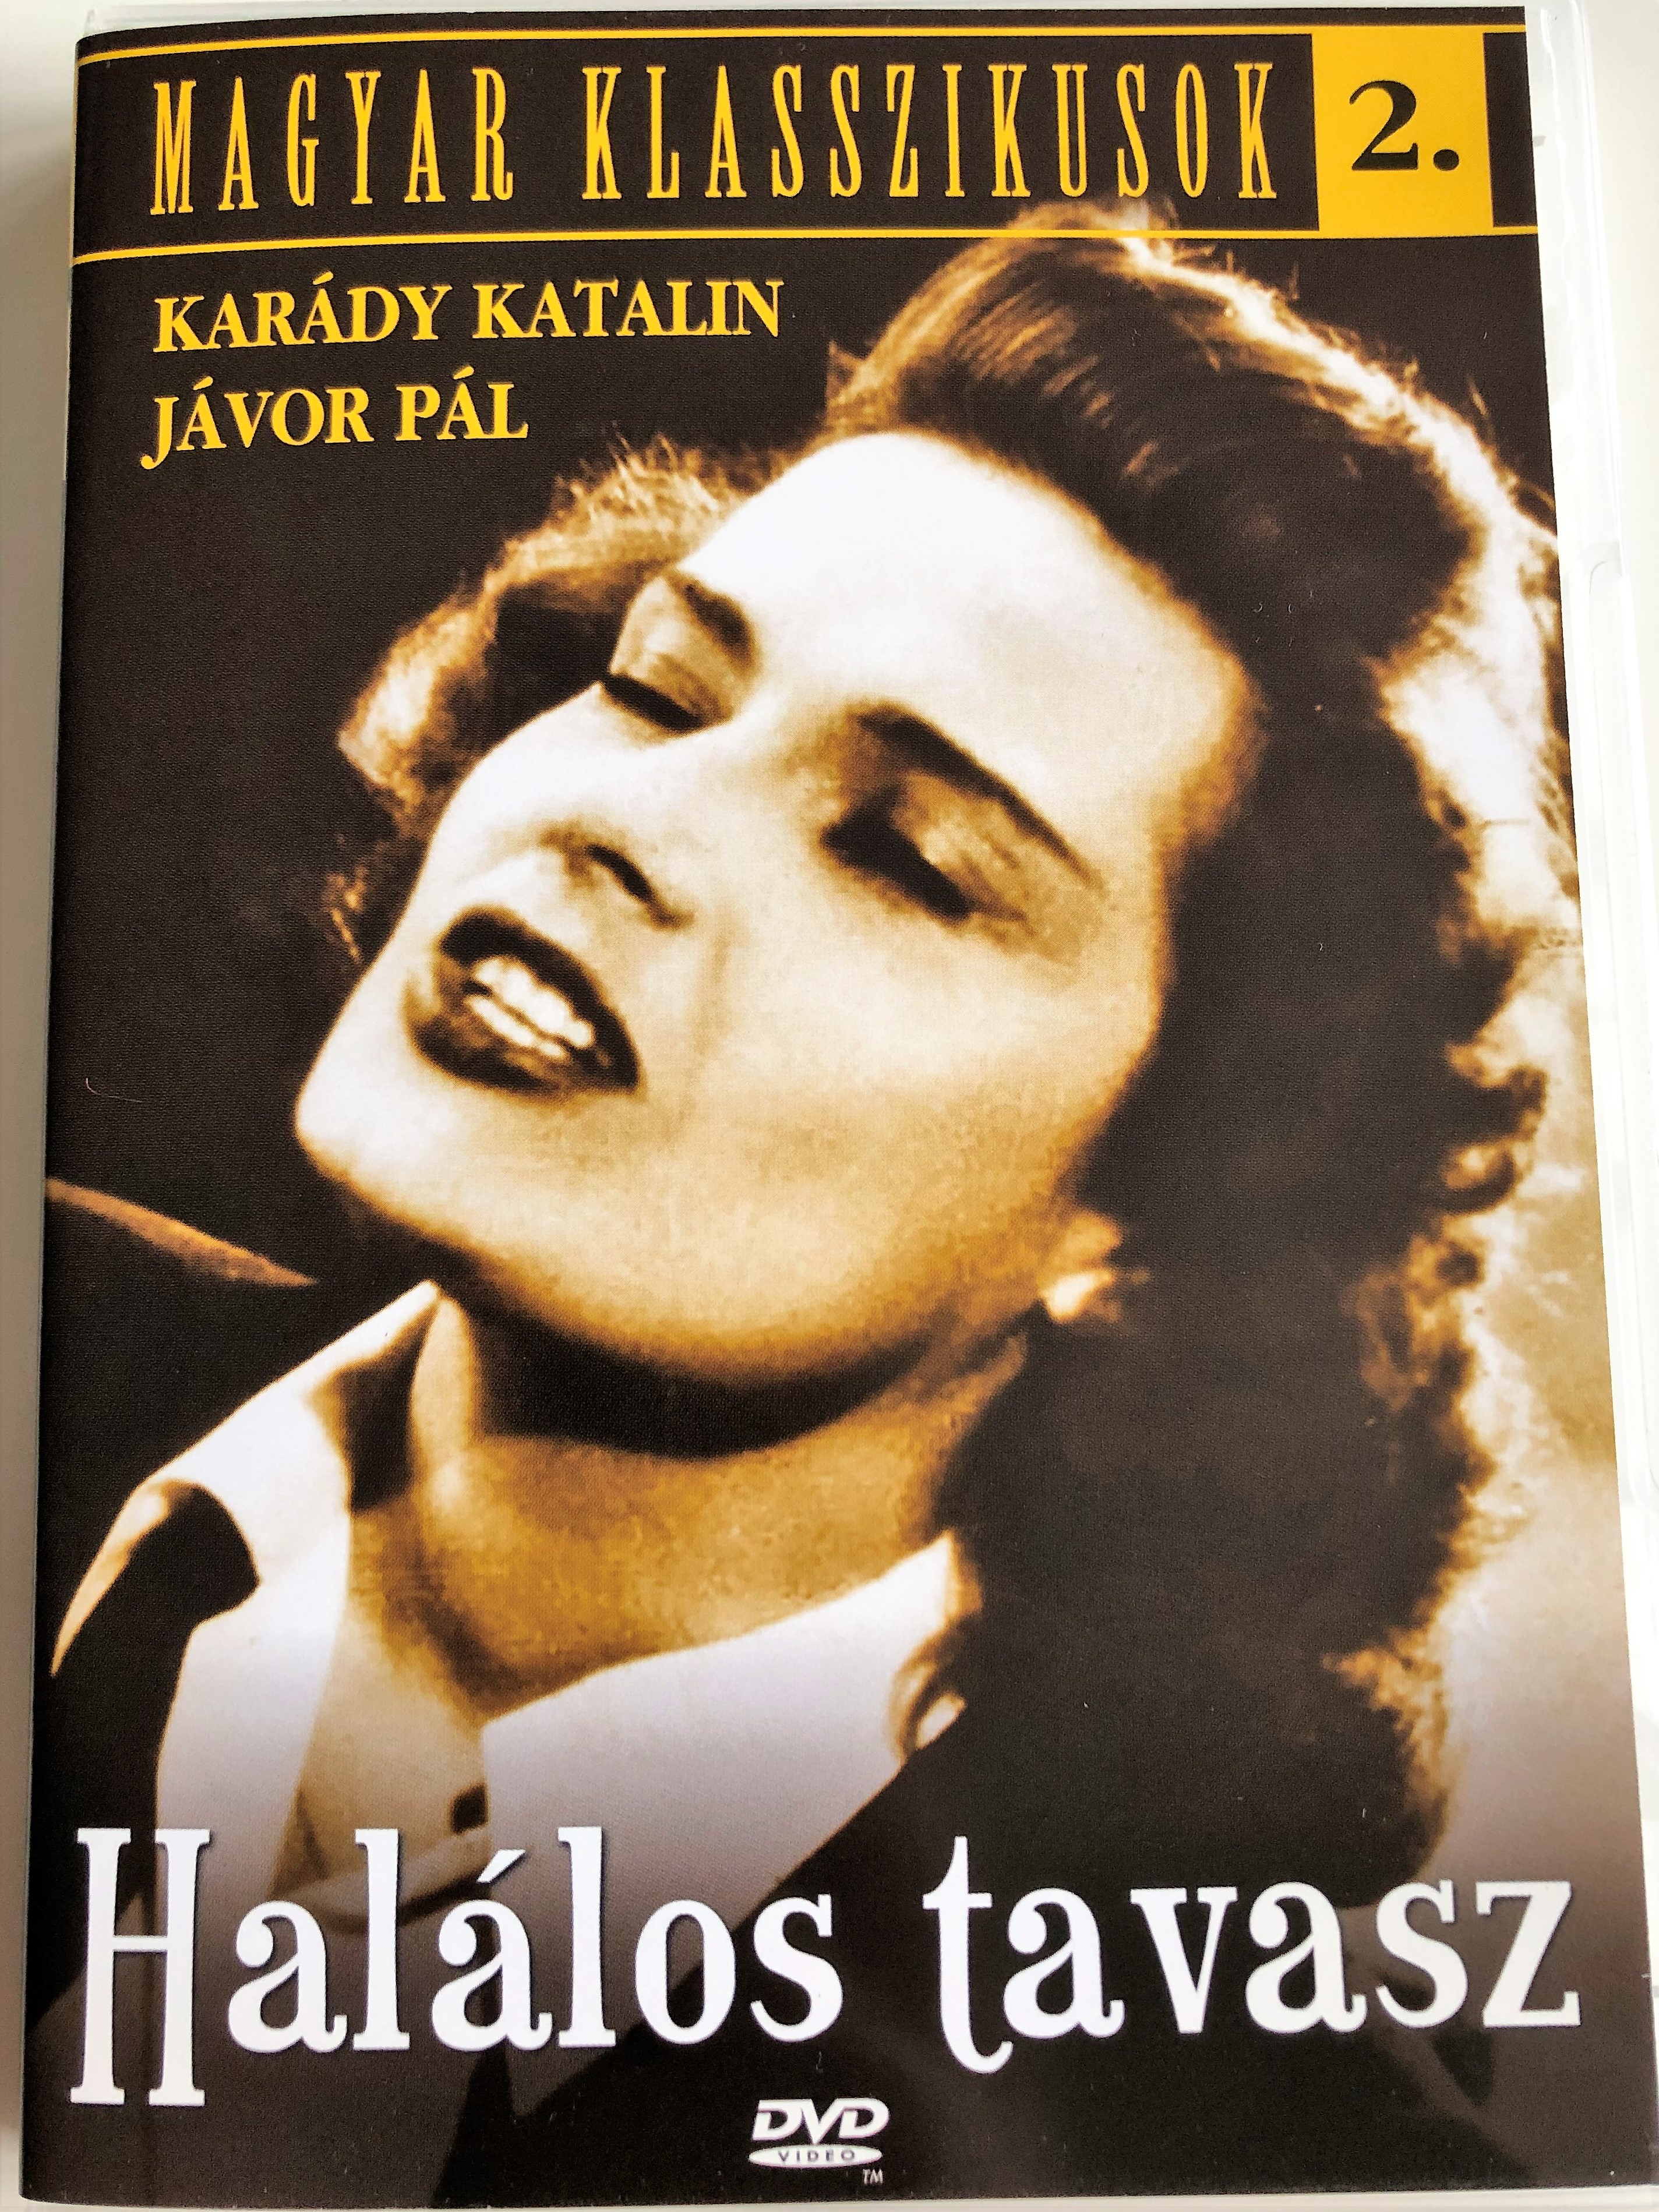 hal-los-tavasz-dvd-1939-deadly-spring-directed-by-l-szl-kalm-r-starring-kar-dy-katalin-j-vor-p-l-hungarian-classics-2-1-.jpg